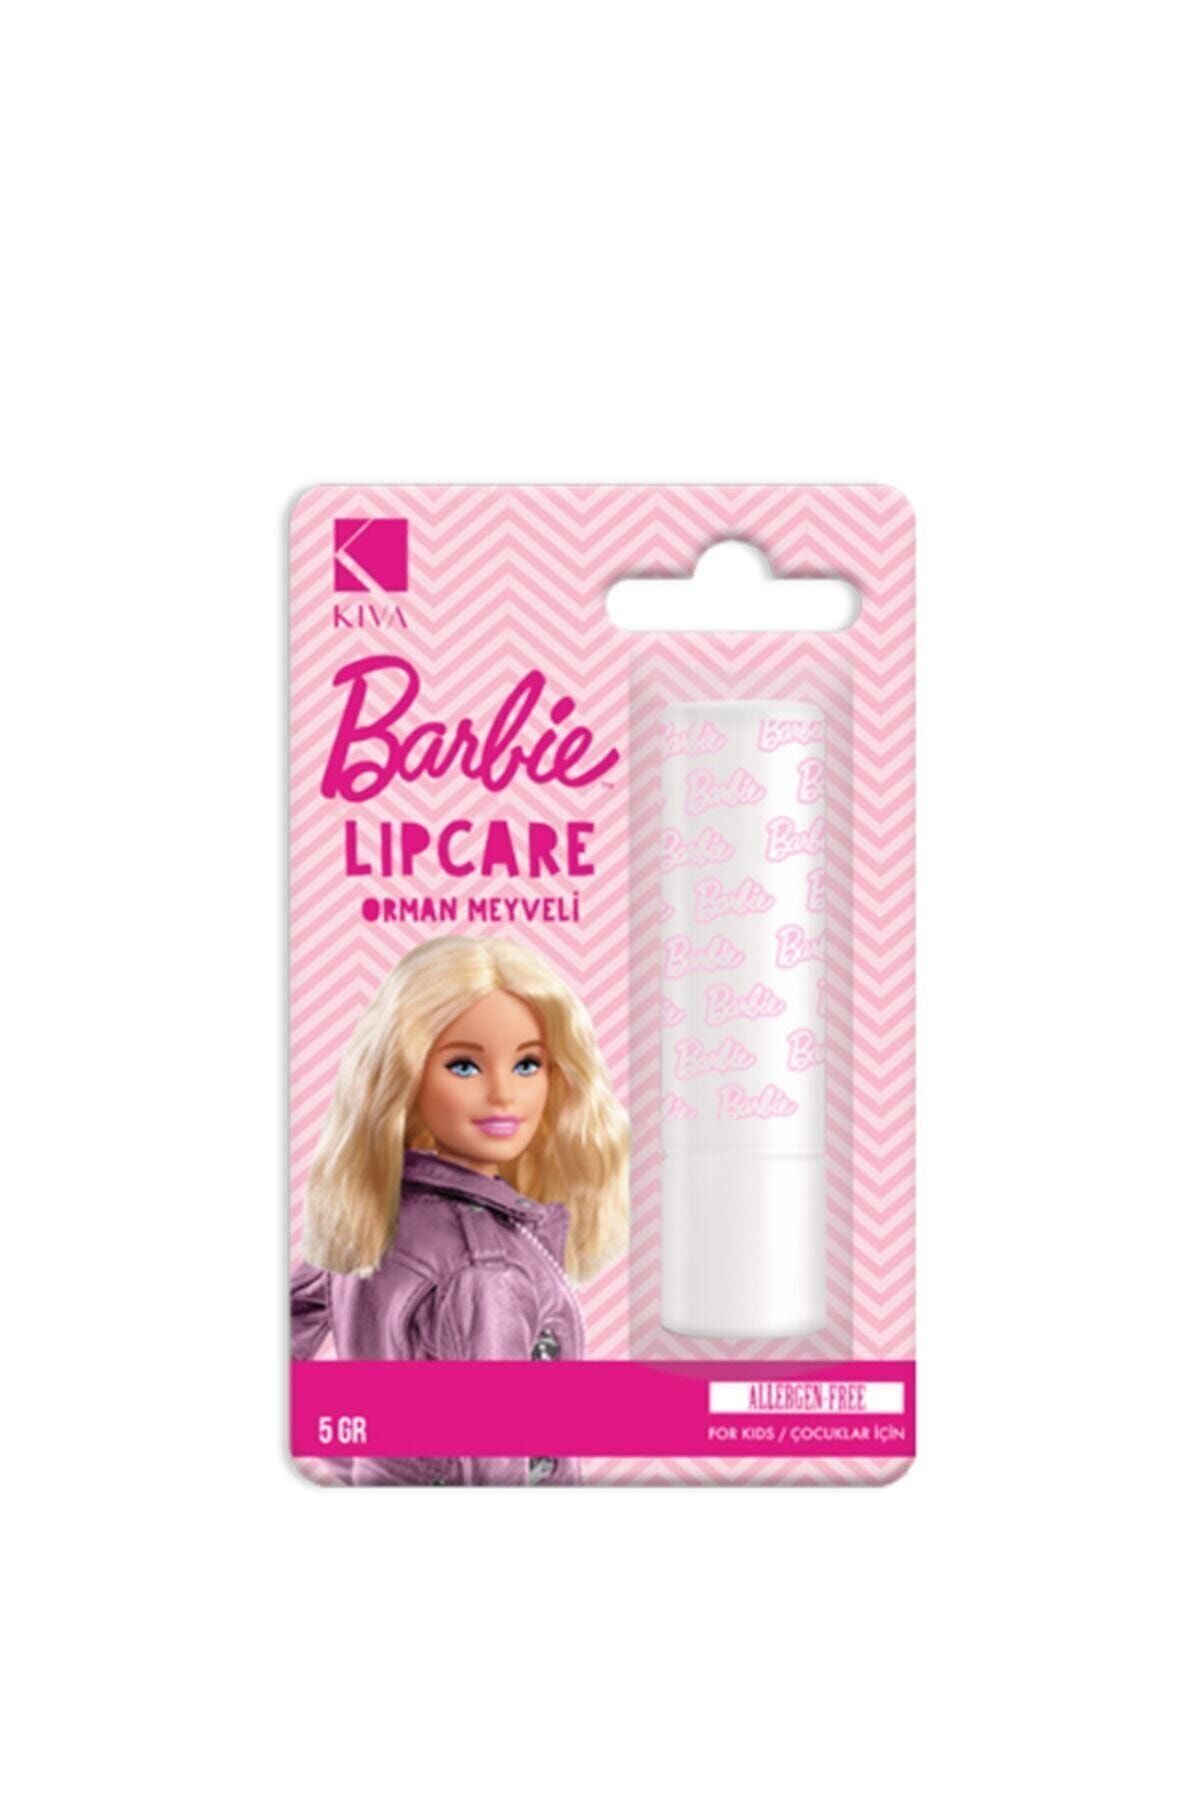 Barbie Barbıe Lipcare Orman Meyveli 5gr